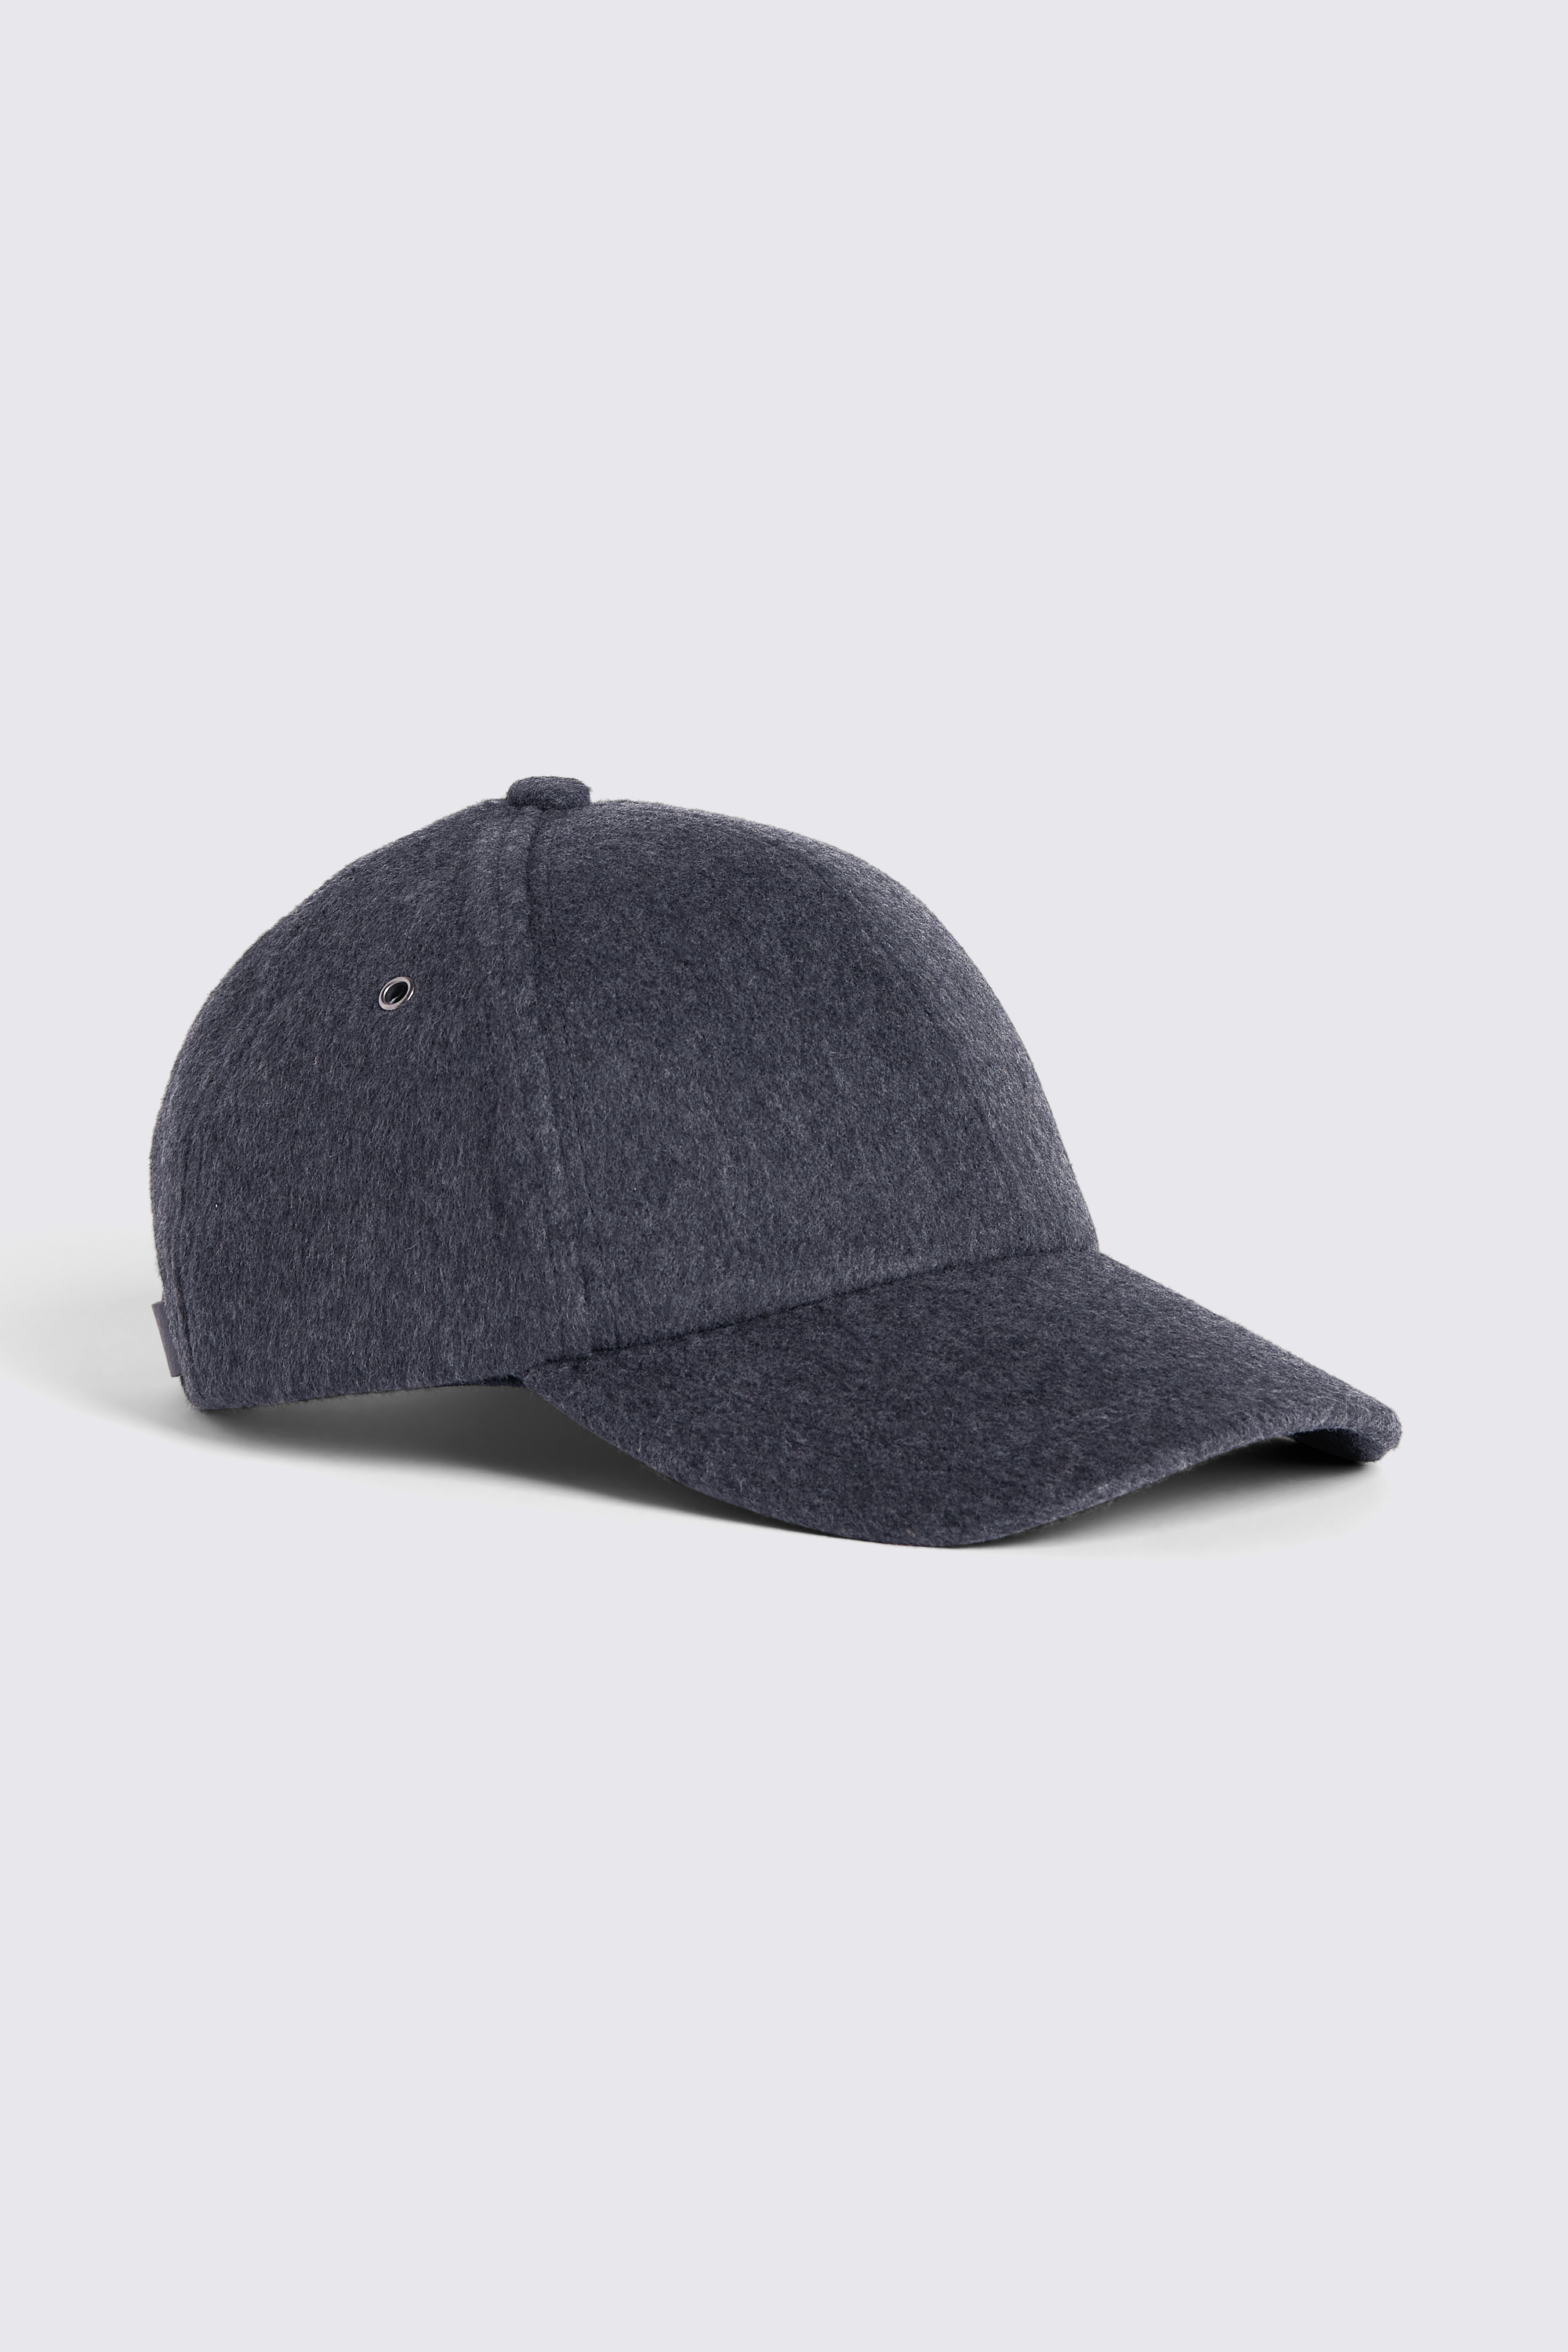 Grey Brushed Wool Baseball Cap | Buy Online at Moss